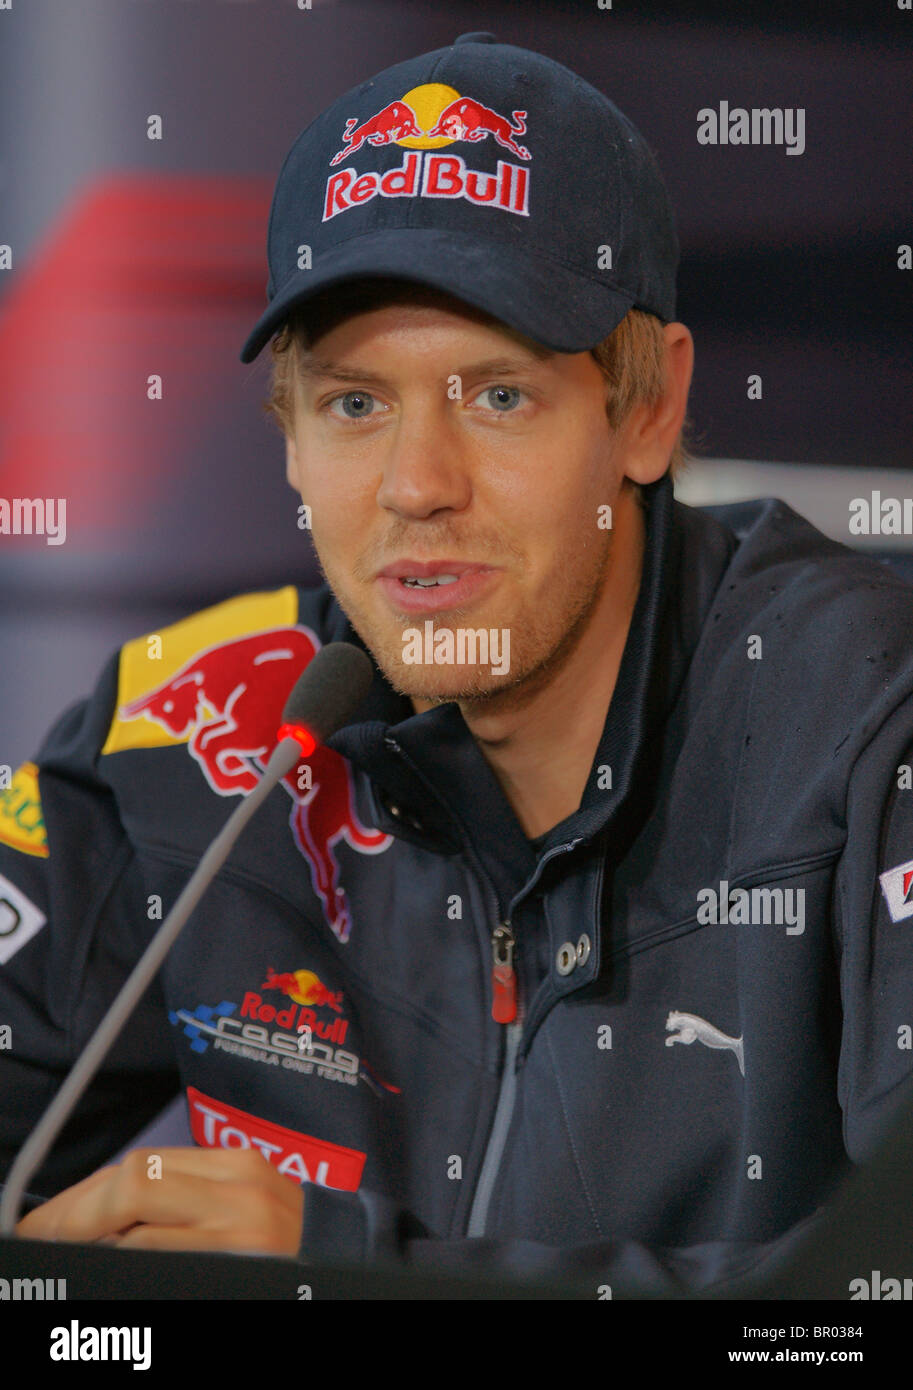 FIA F1 Formula One World Championship Hockenheim with Sebastian Vettel, Red Bull Racing Stock Photo